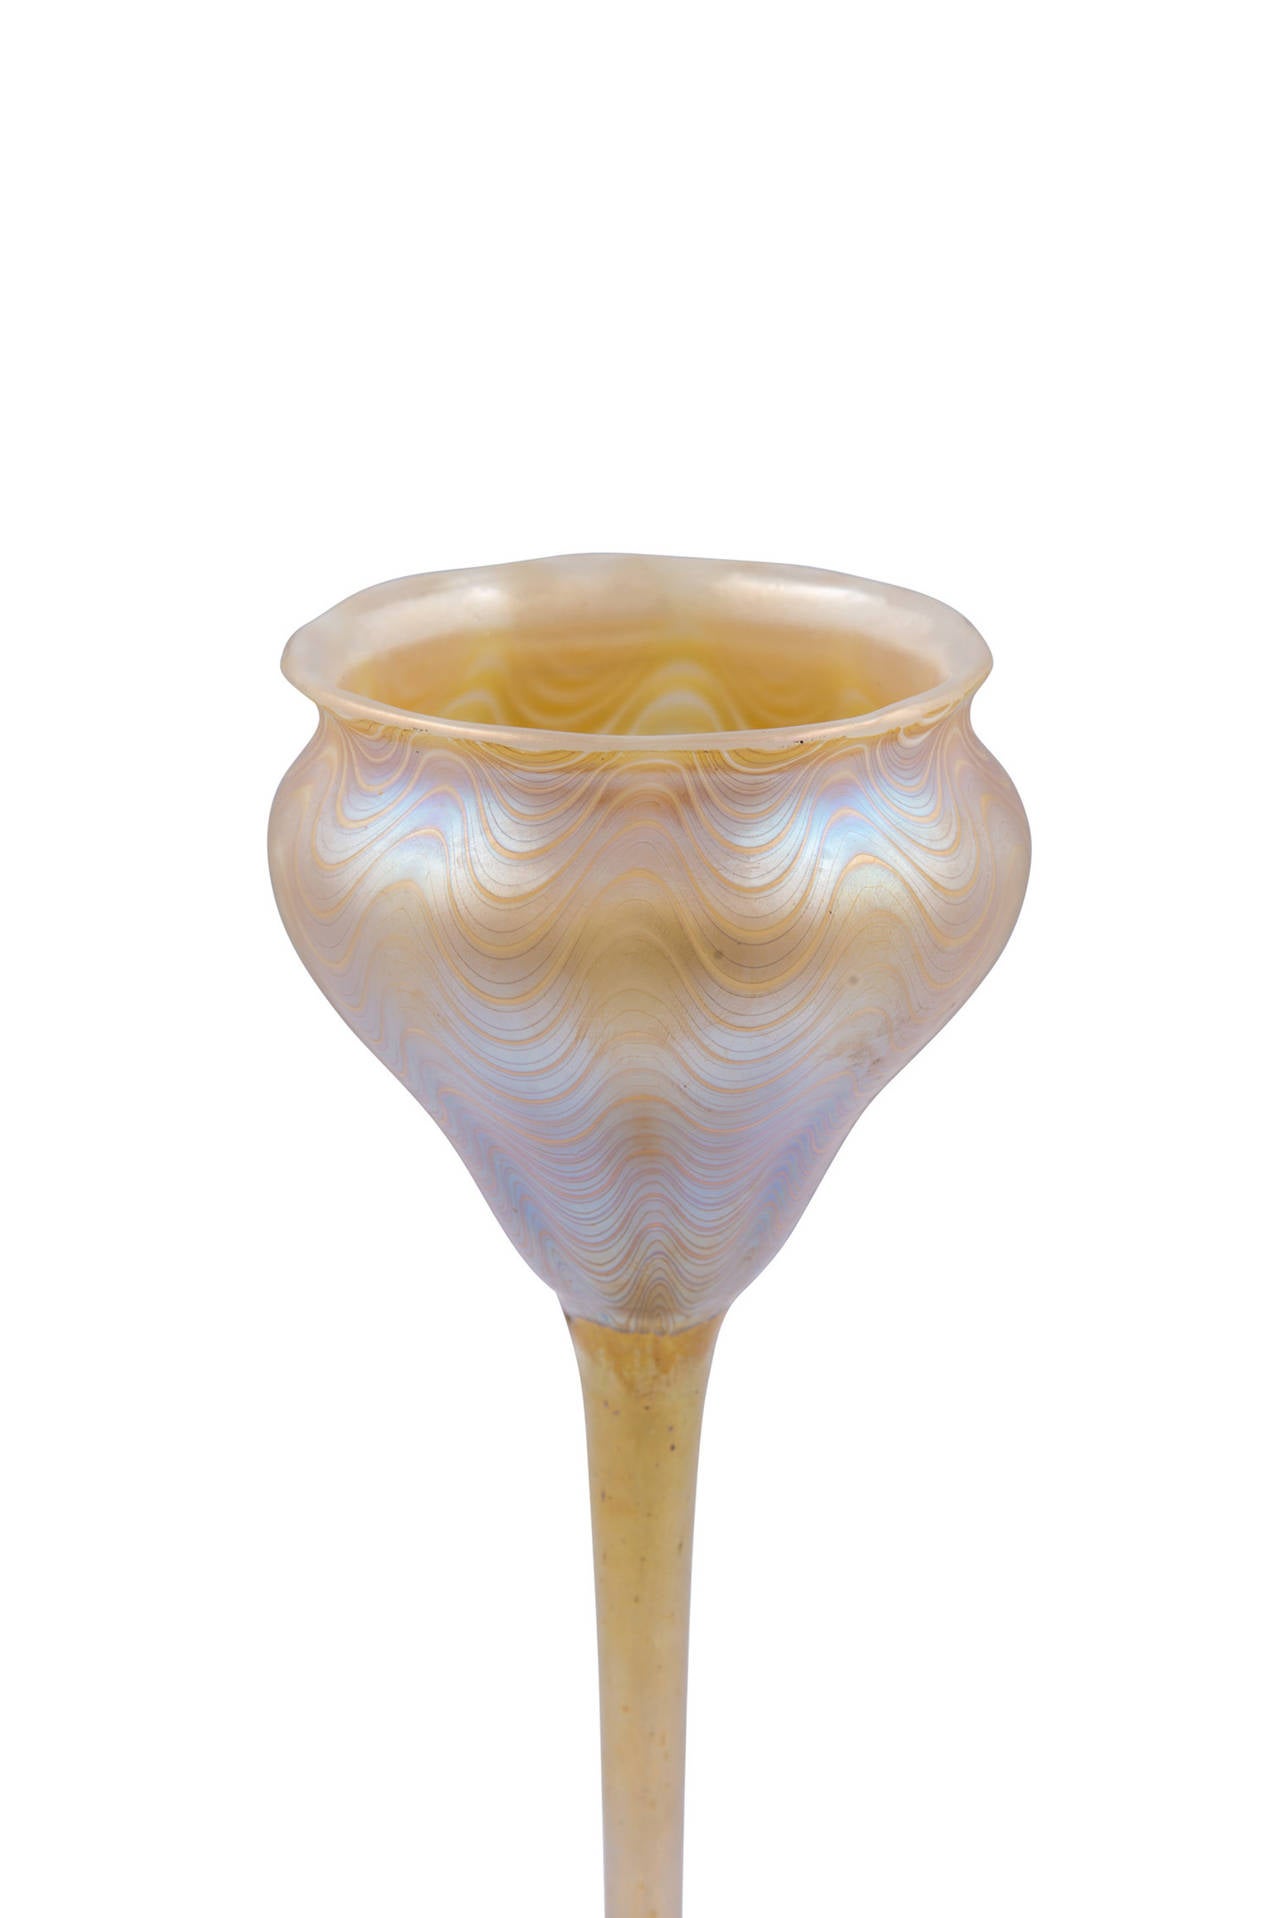 Austrian Candia Phenomen Gre 6893 Rare Tulip Vase by Loetz and Franz Hofstotter For Sale